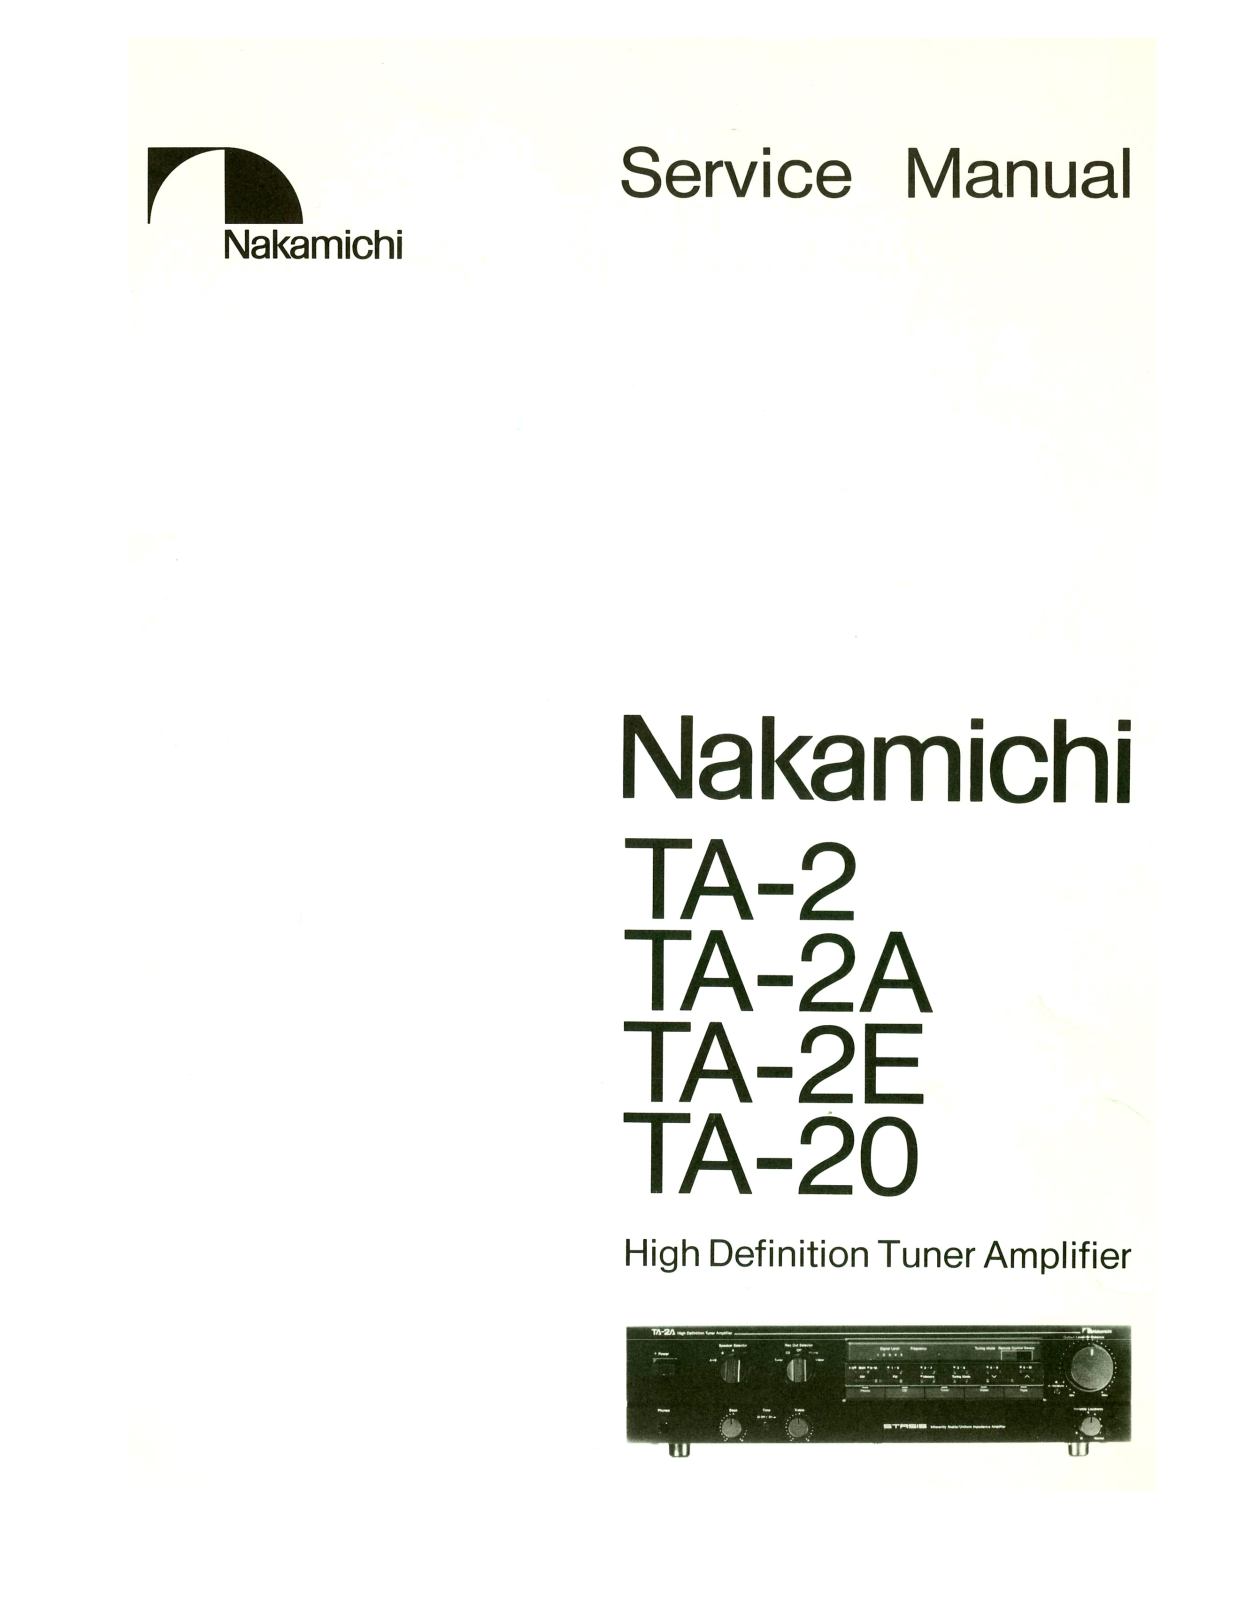 Nakamichi TA-20, TA-2E, TA-2A, TA-2 Service Manual